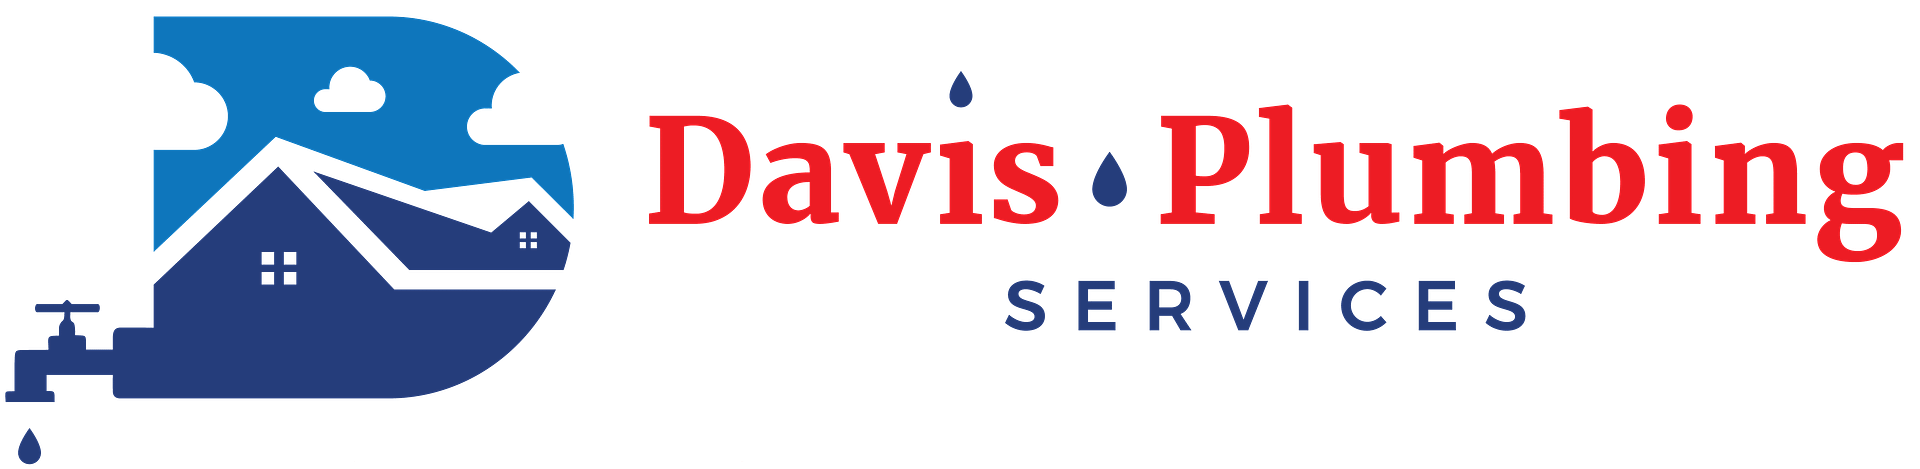 Davis Plumbing - Where Quality Meets Commitment